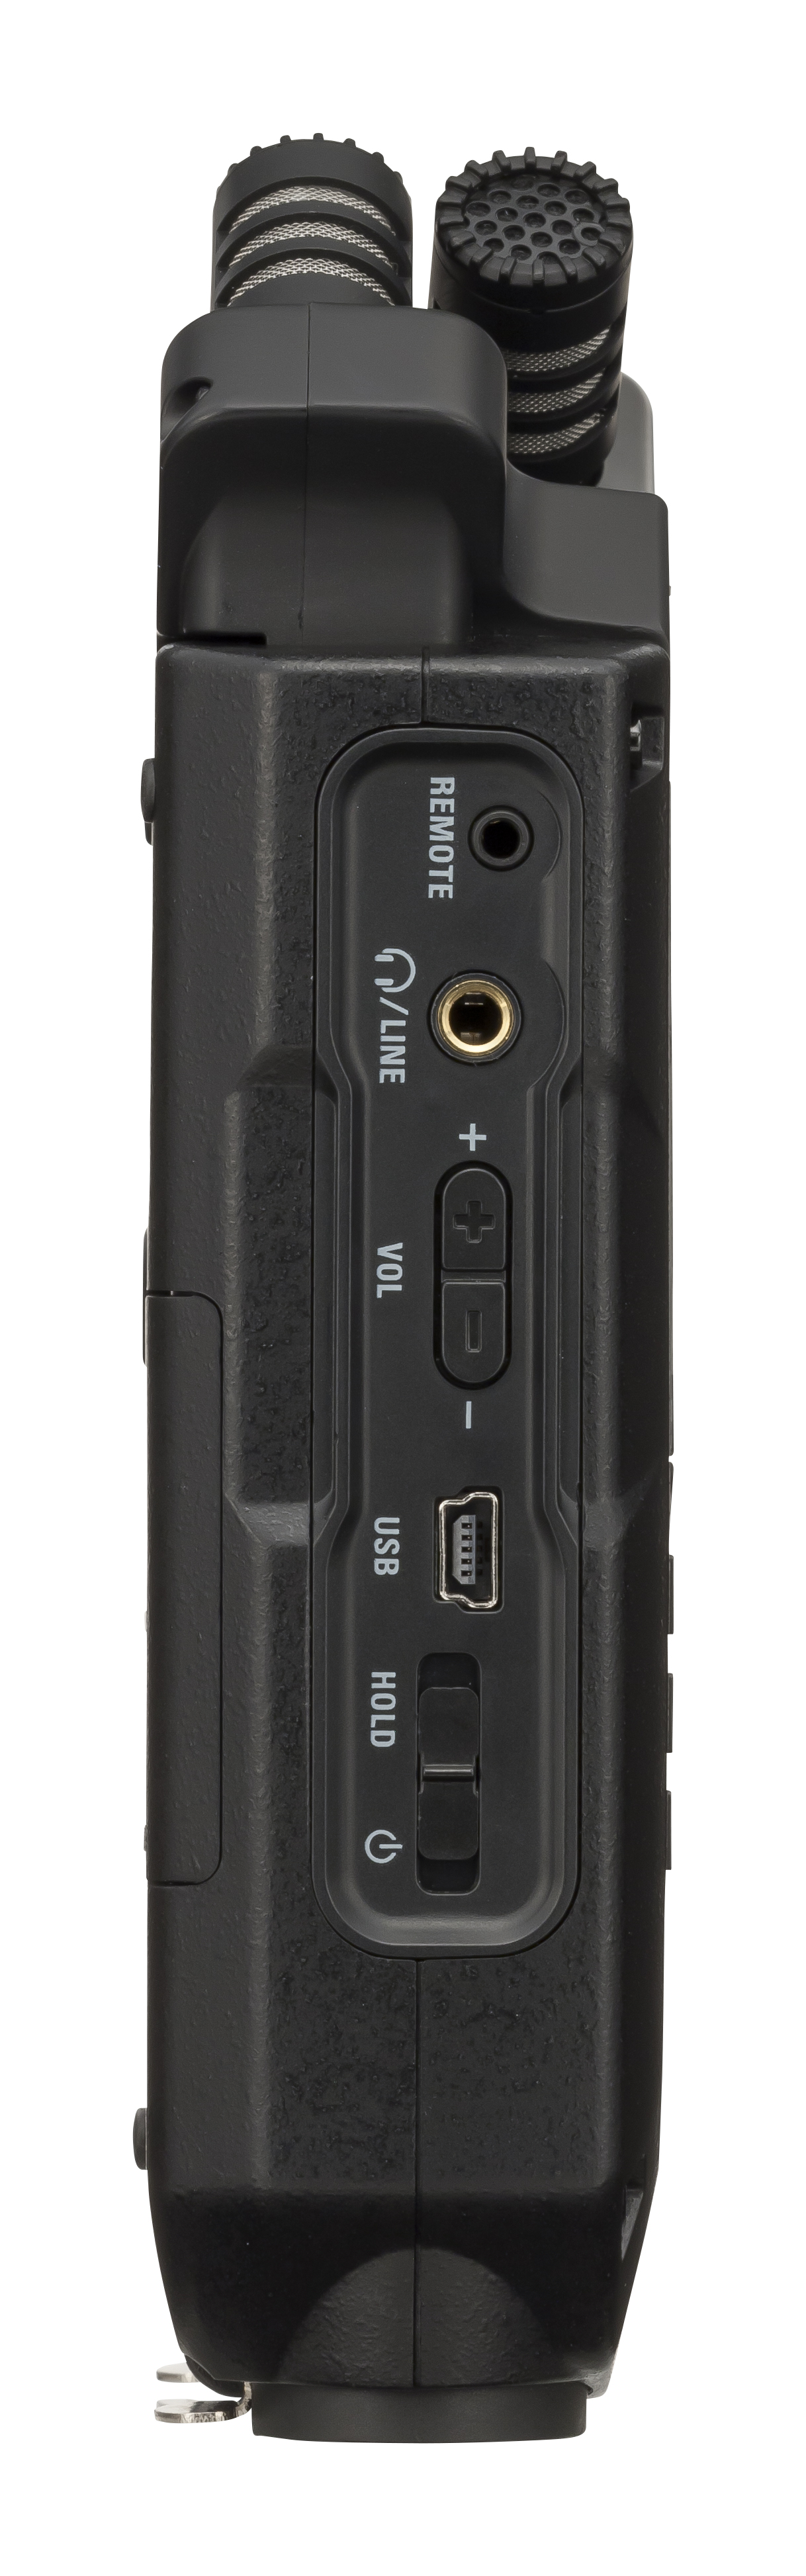 Zoom H4n Pro Black + Pack Accessoires - Portable recorder - Variation 2